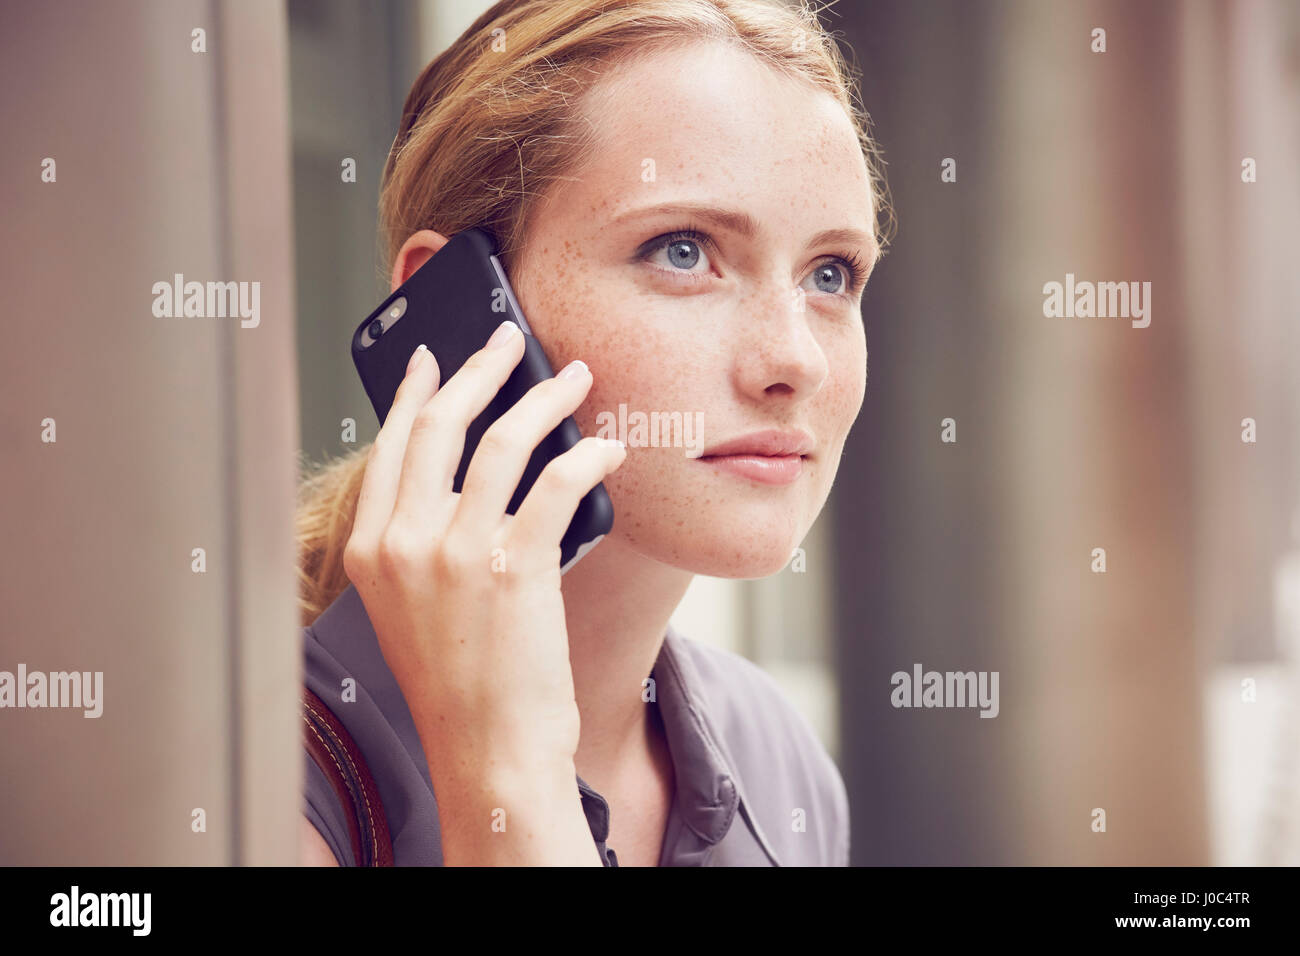 Woman using mobile phone Stock Photo